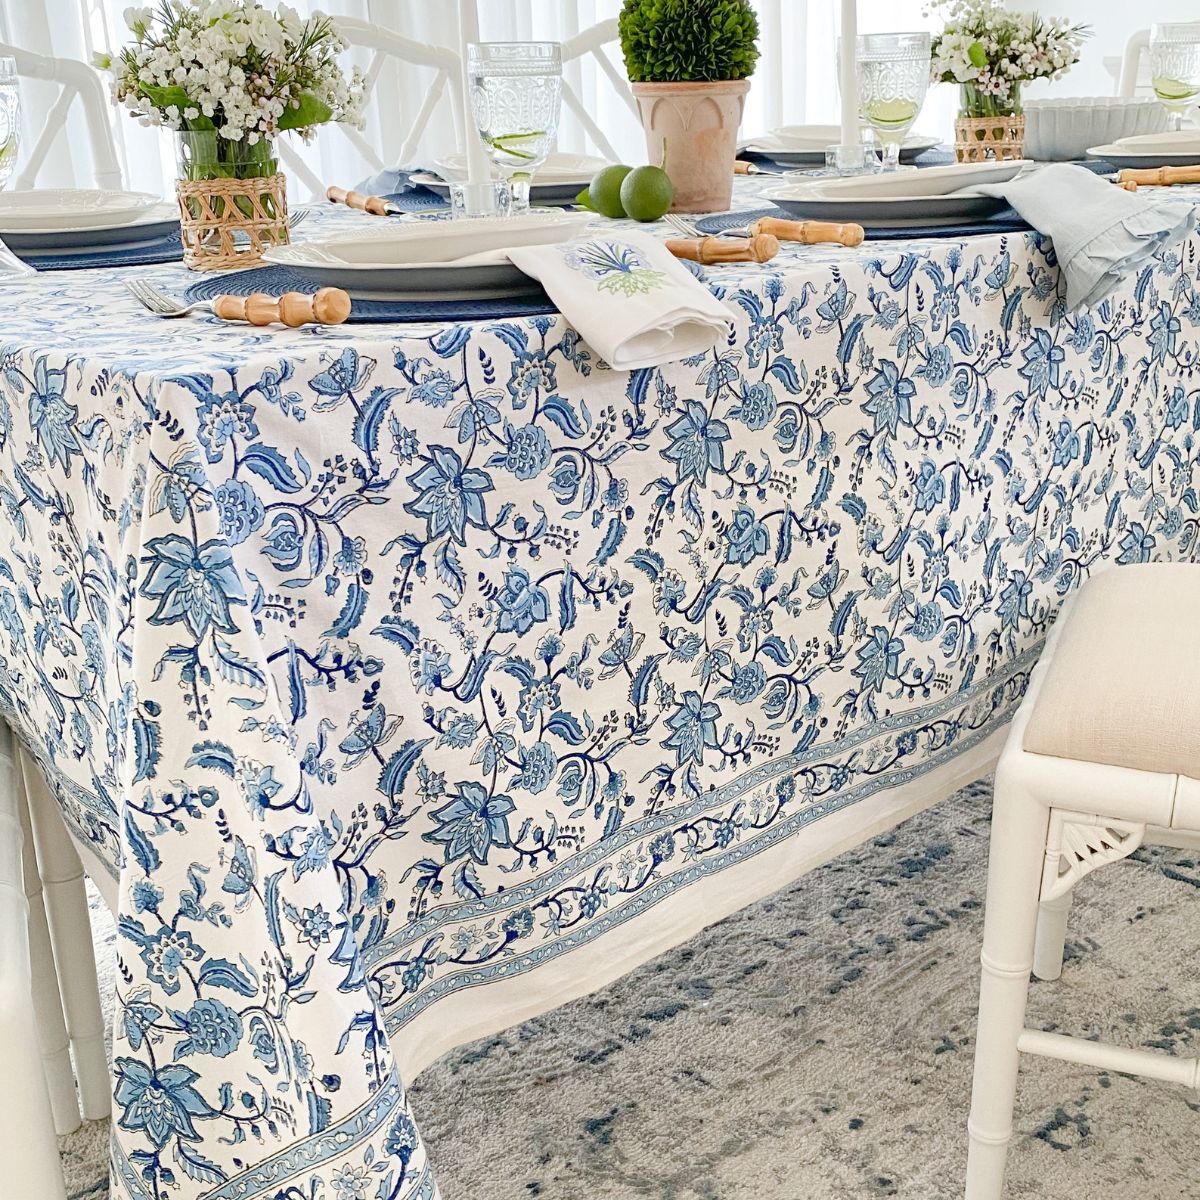 Sample Chintz Blue tablecloth 150x220 cm ©